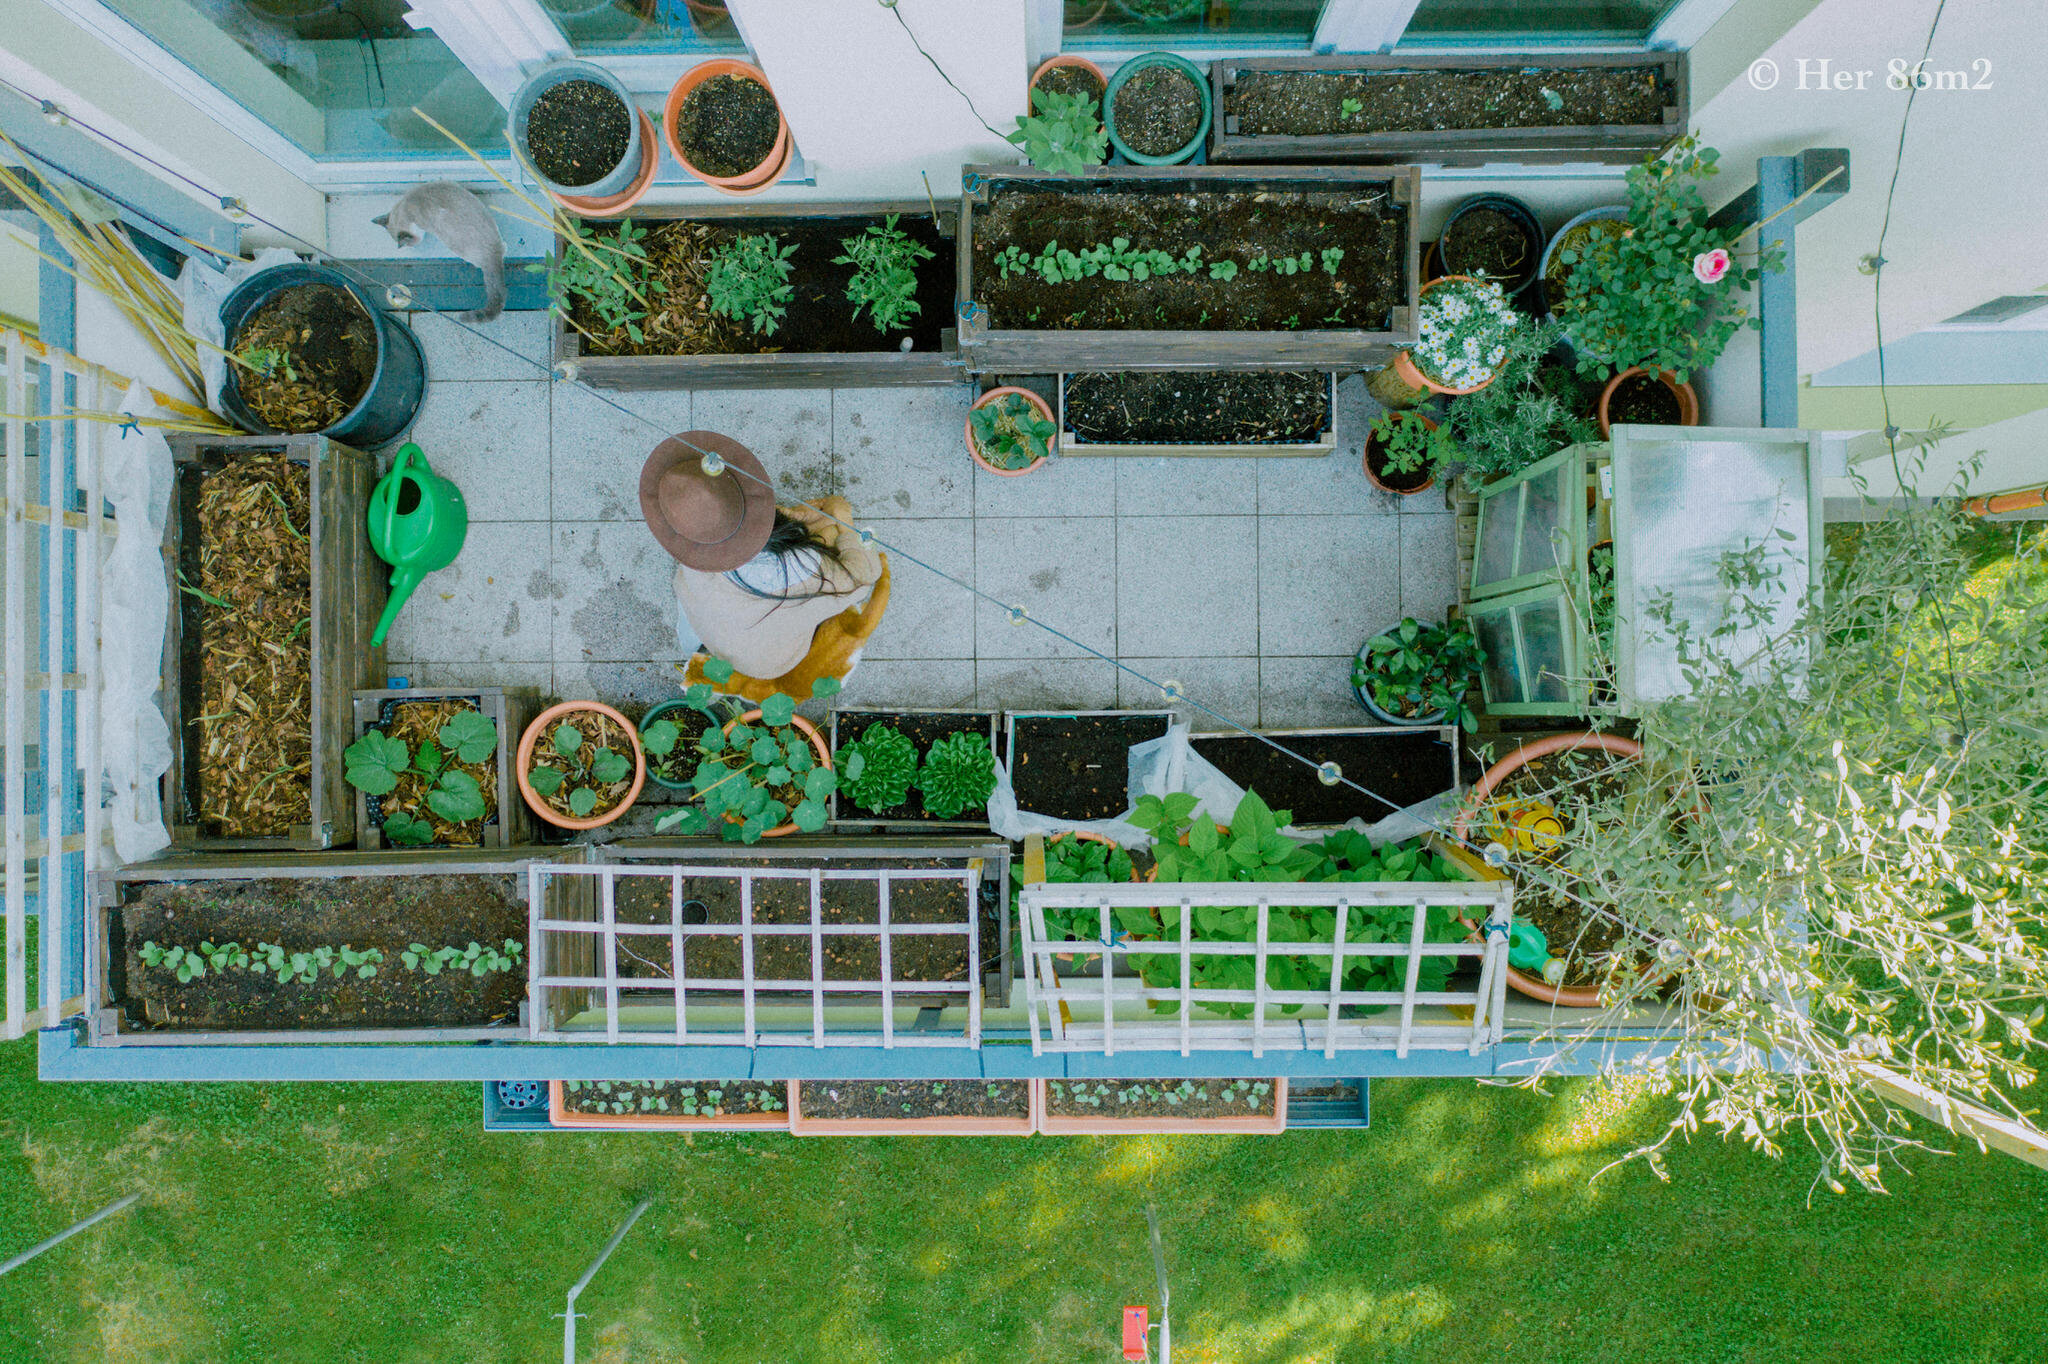 Her 86m2 - My 8m² Balcony Vegetable Garden | A Wonderful 200 Day Journey 26b.jpg